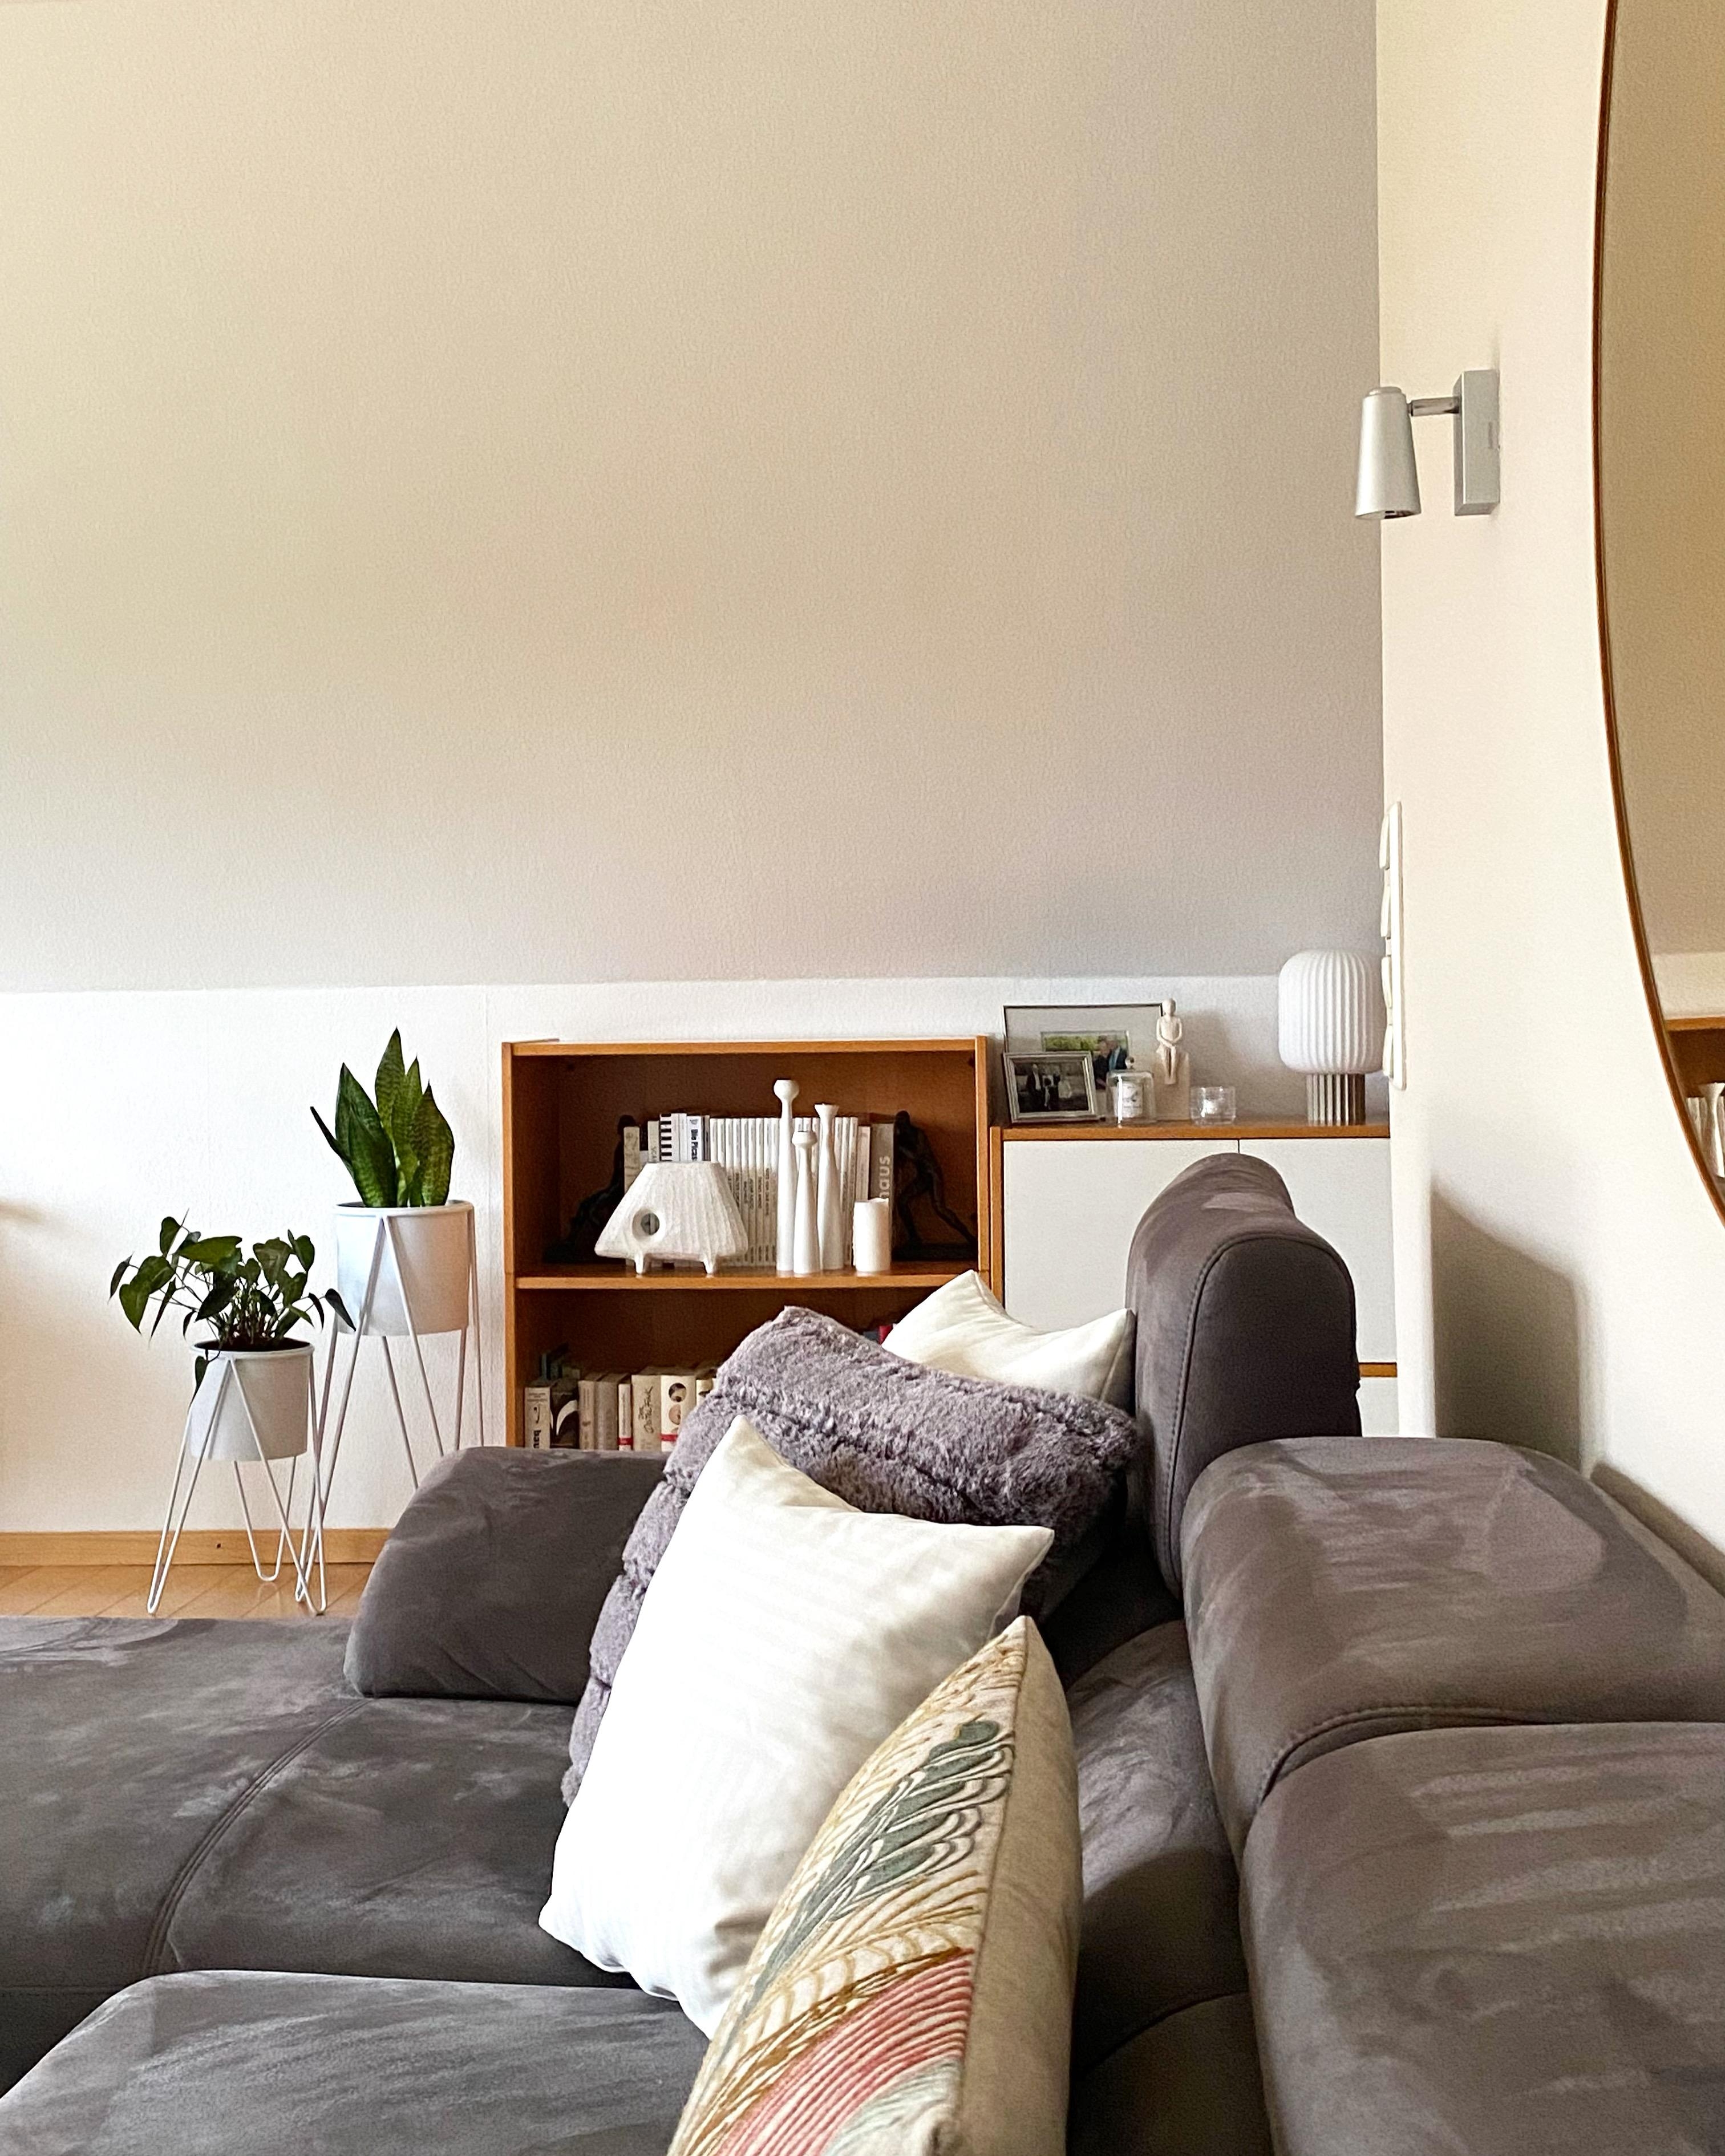 #livingroom #regal #home #cozycorner #zuhause #couc